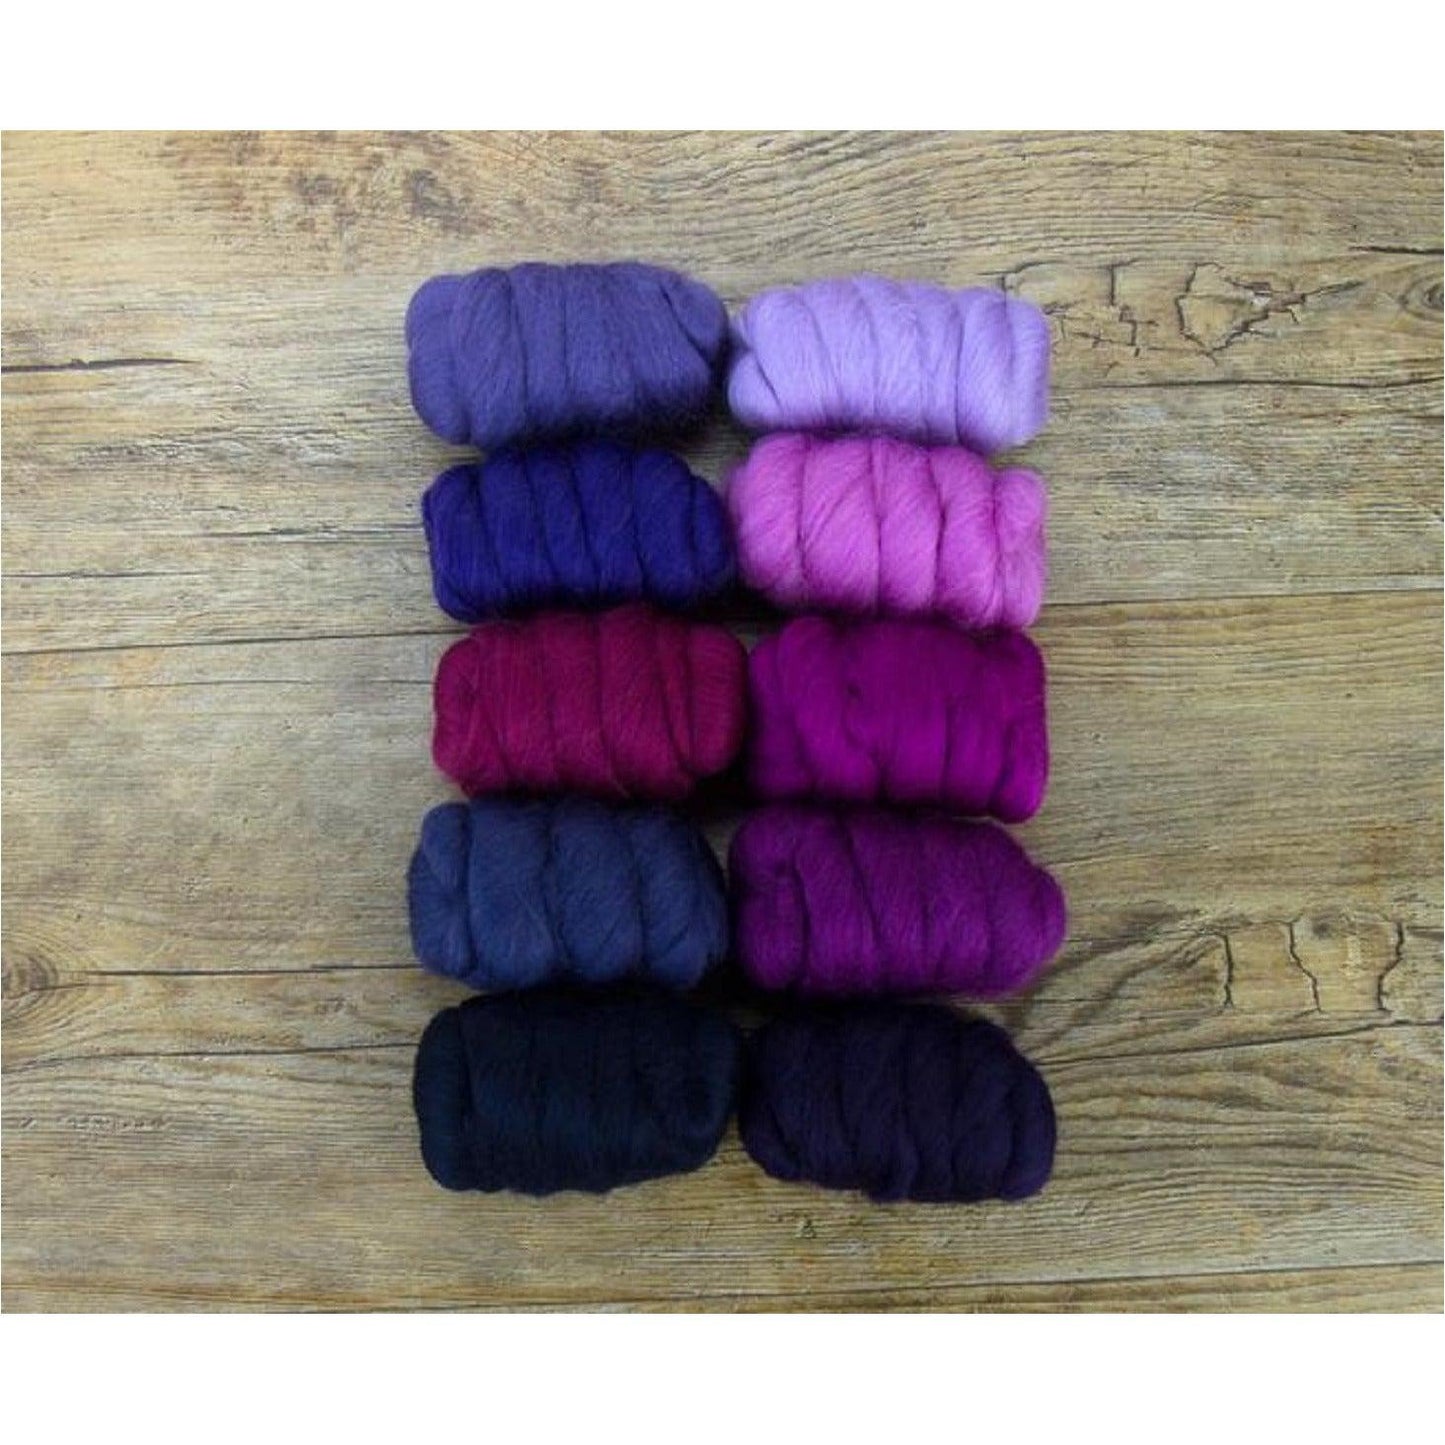 Mixed Merino Wool Variety Pack | Very Berry (Purples) 250 Grams, 23 Micron